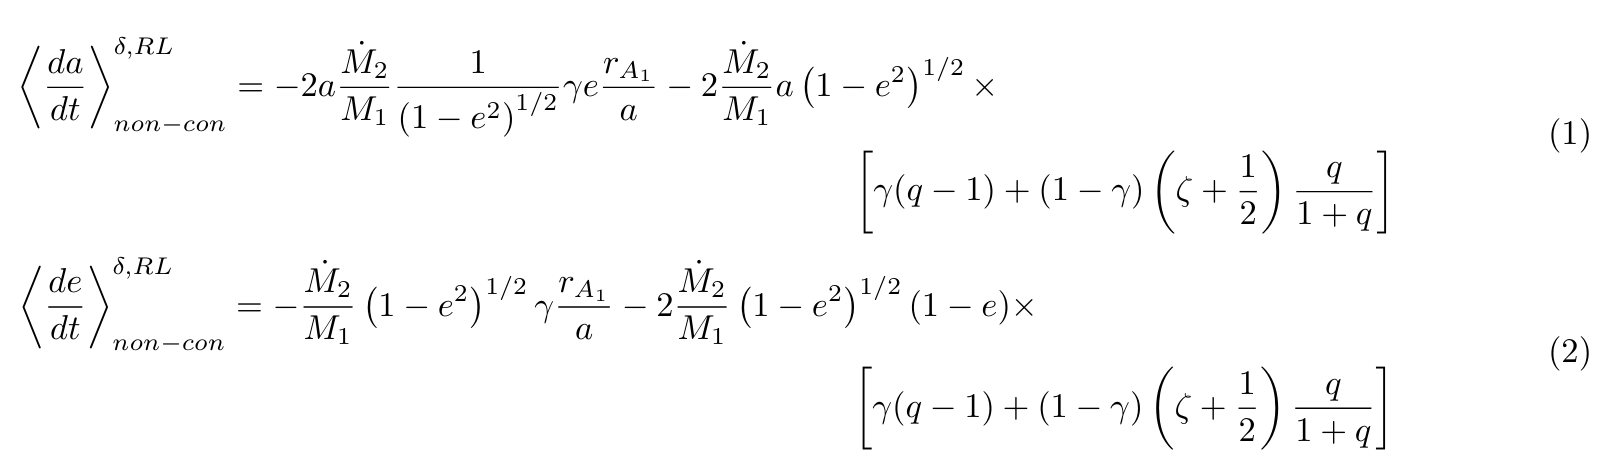 secular-equations